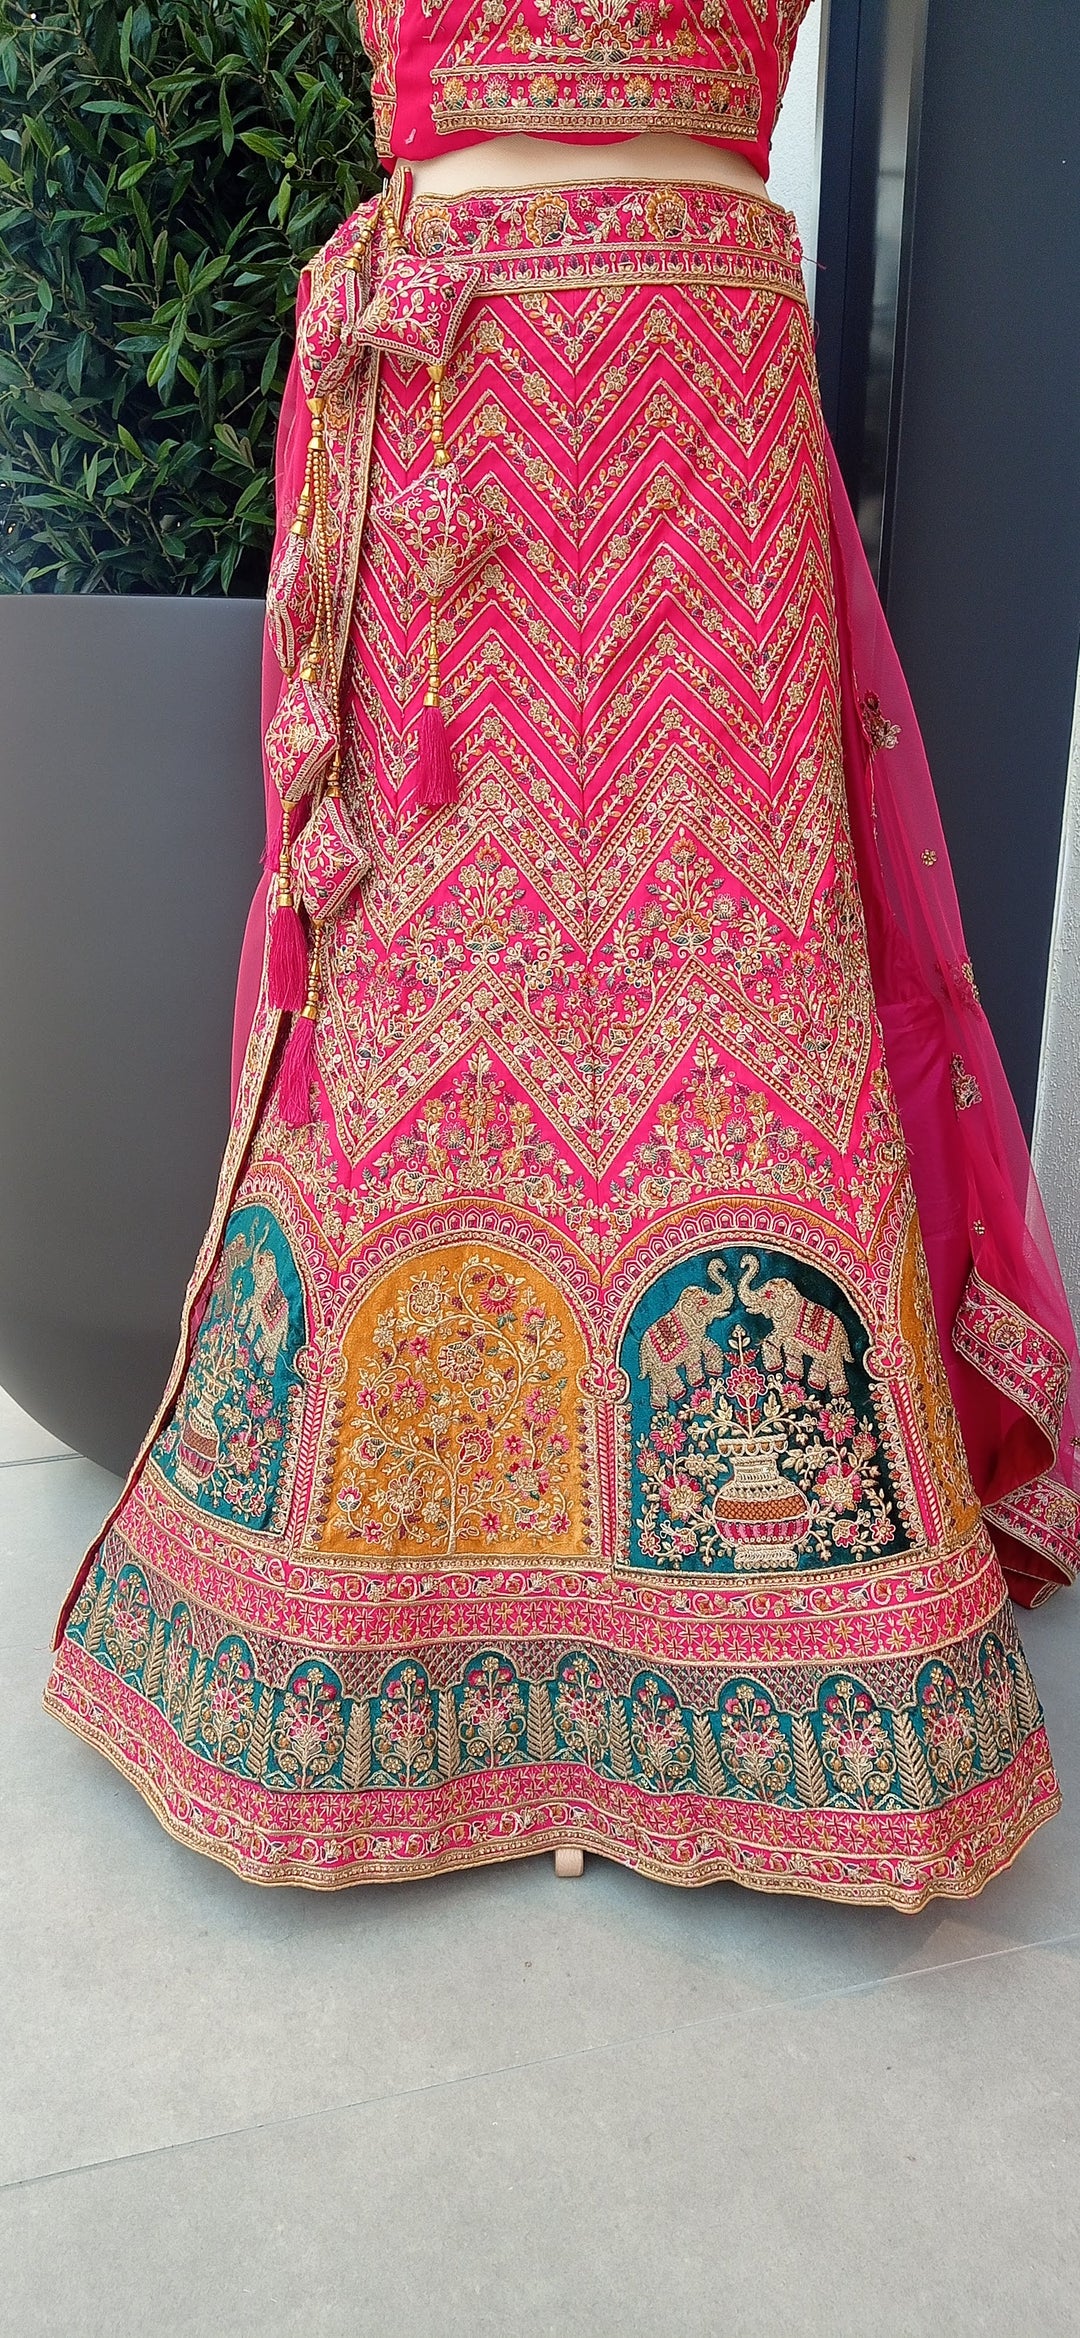 Shagun Bridal Rani Pink and Gold Mughal Lehenga in dubai (Unstitched)